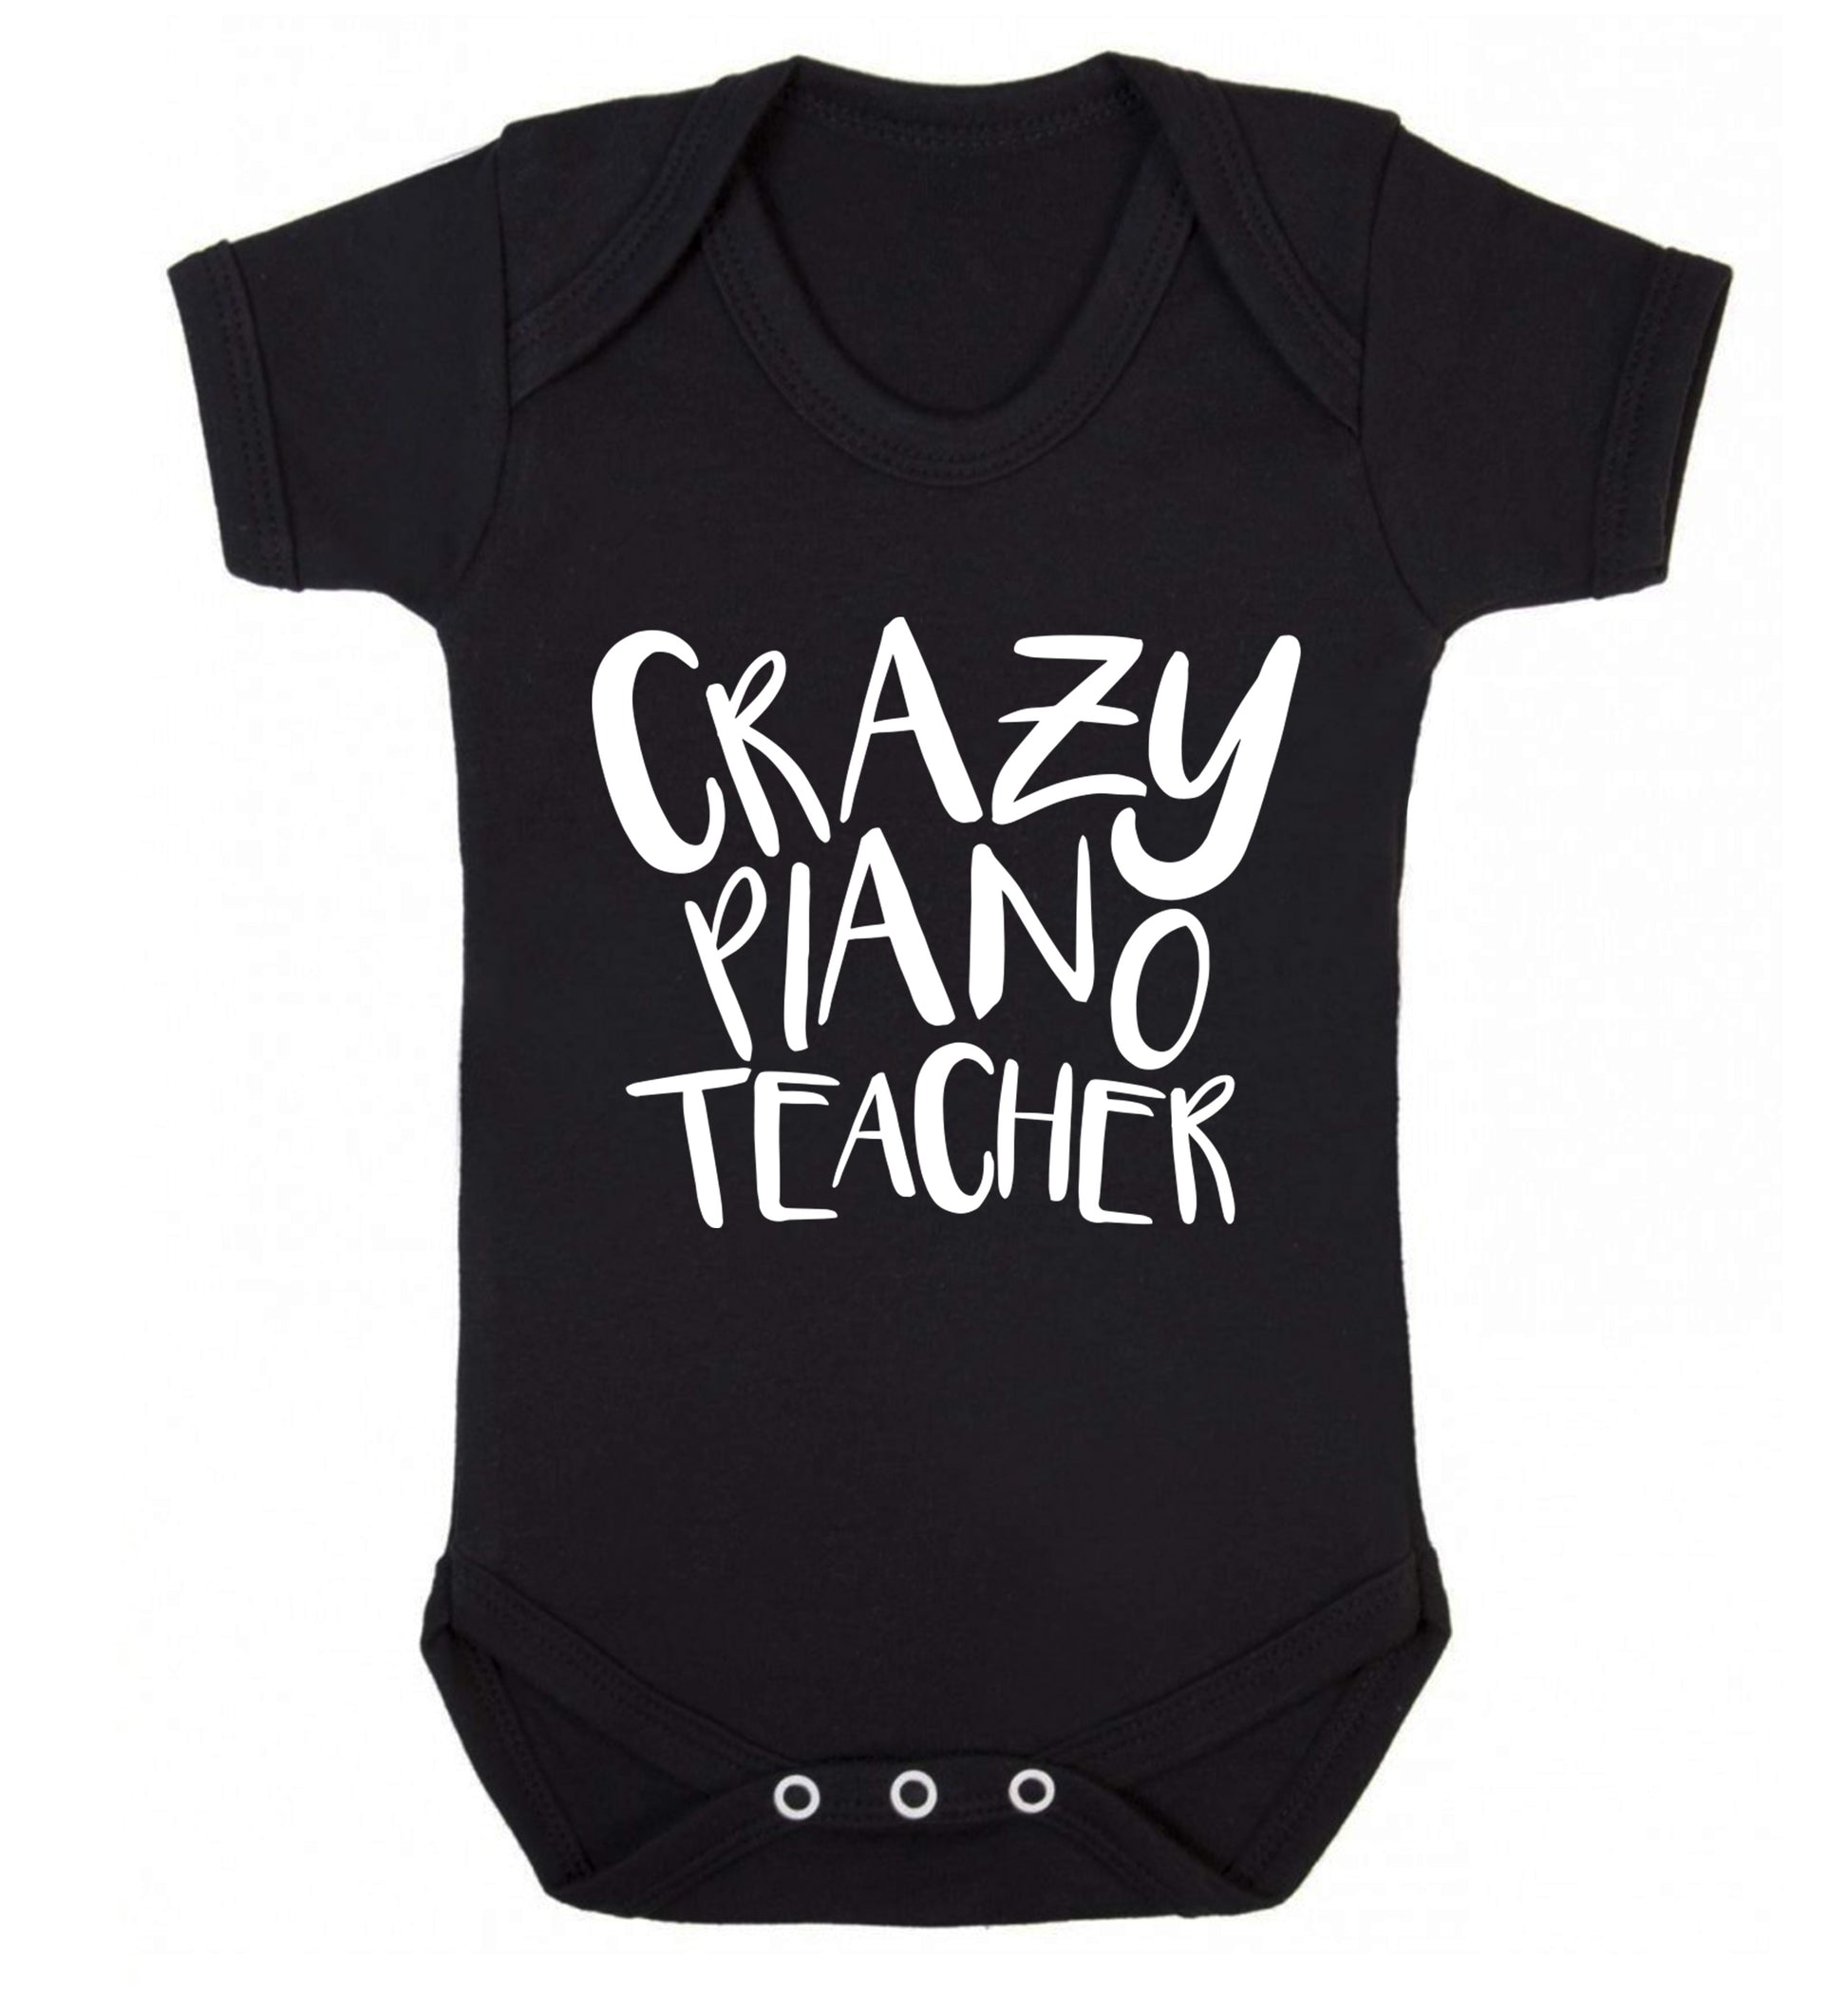 Crazy piano teacher Baby Vest black 18-24 months